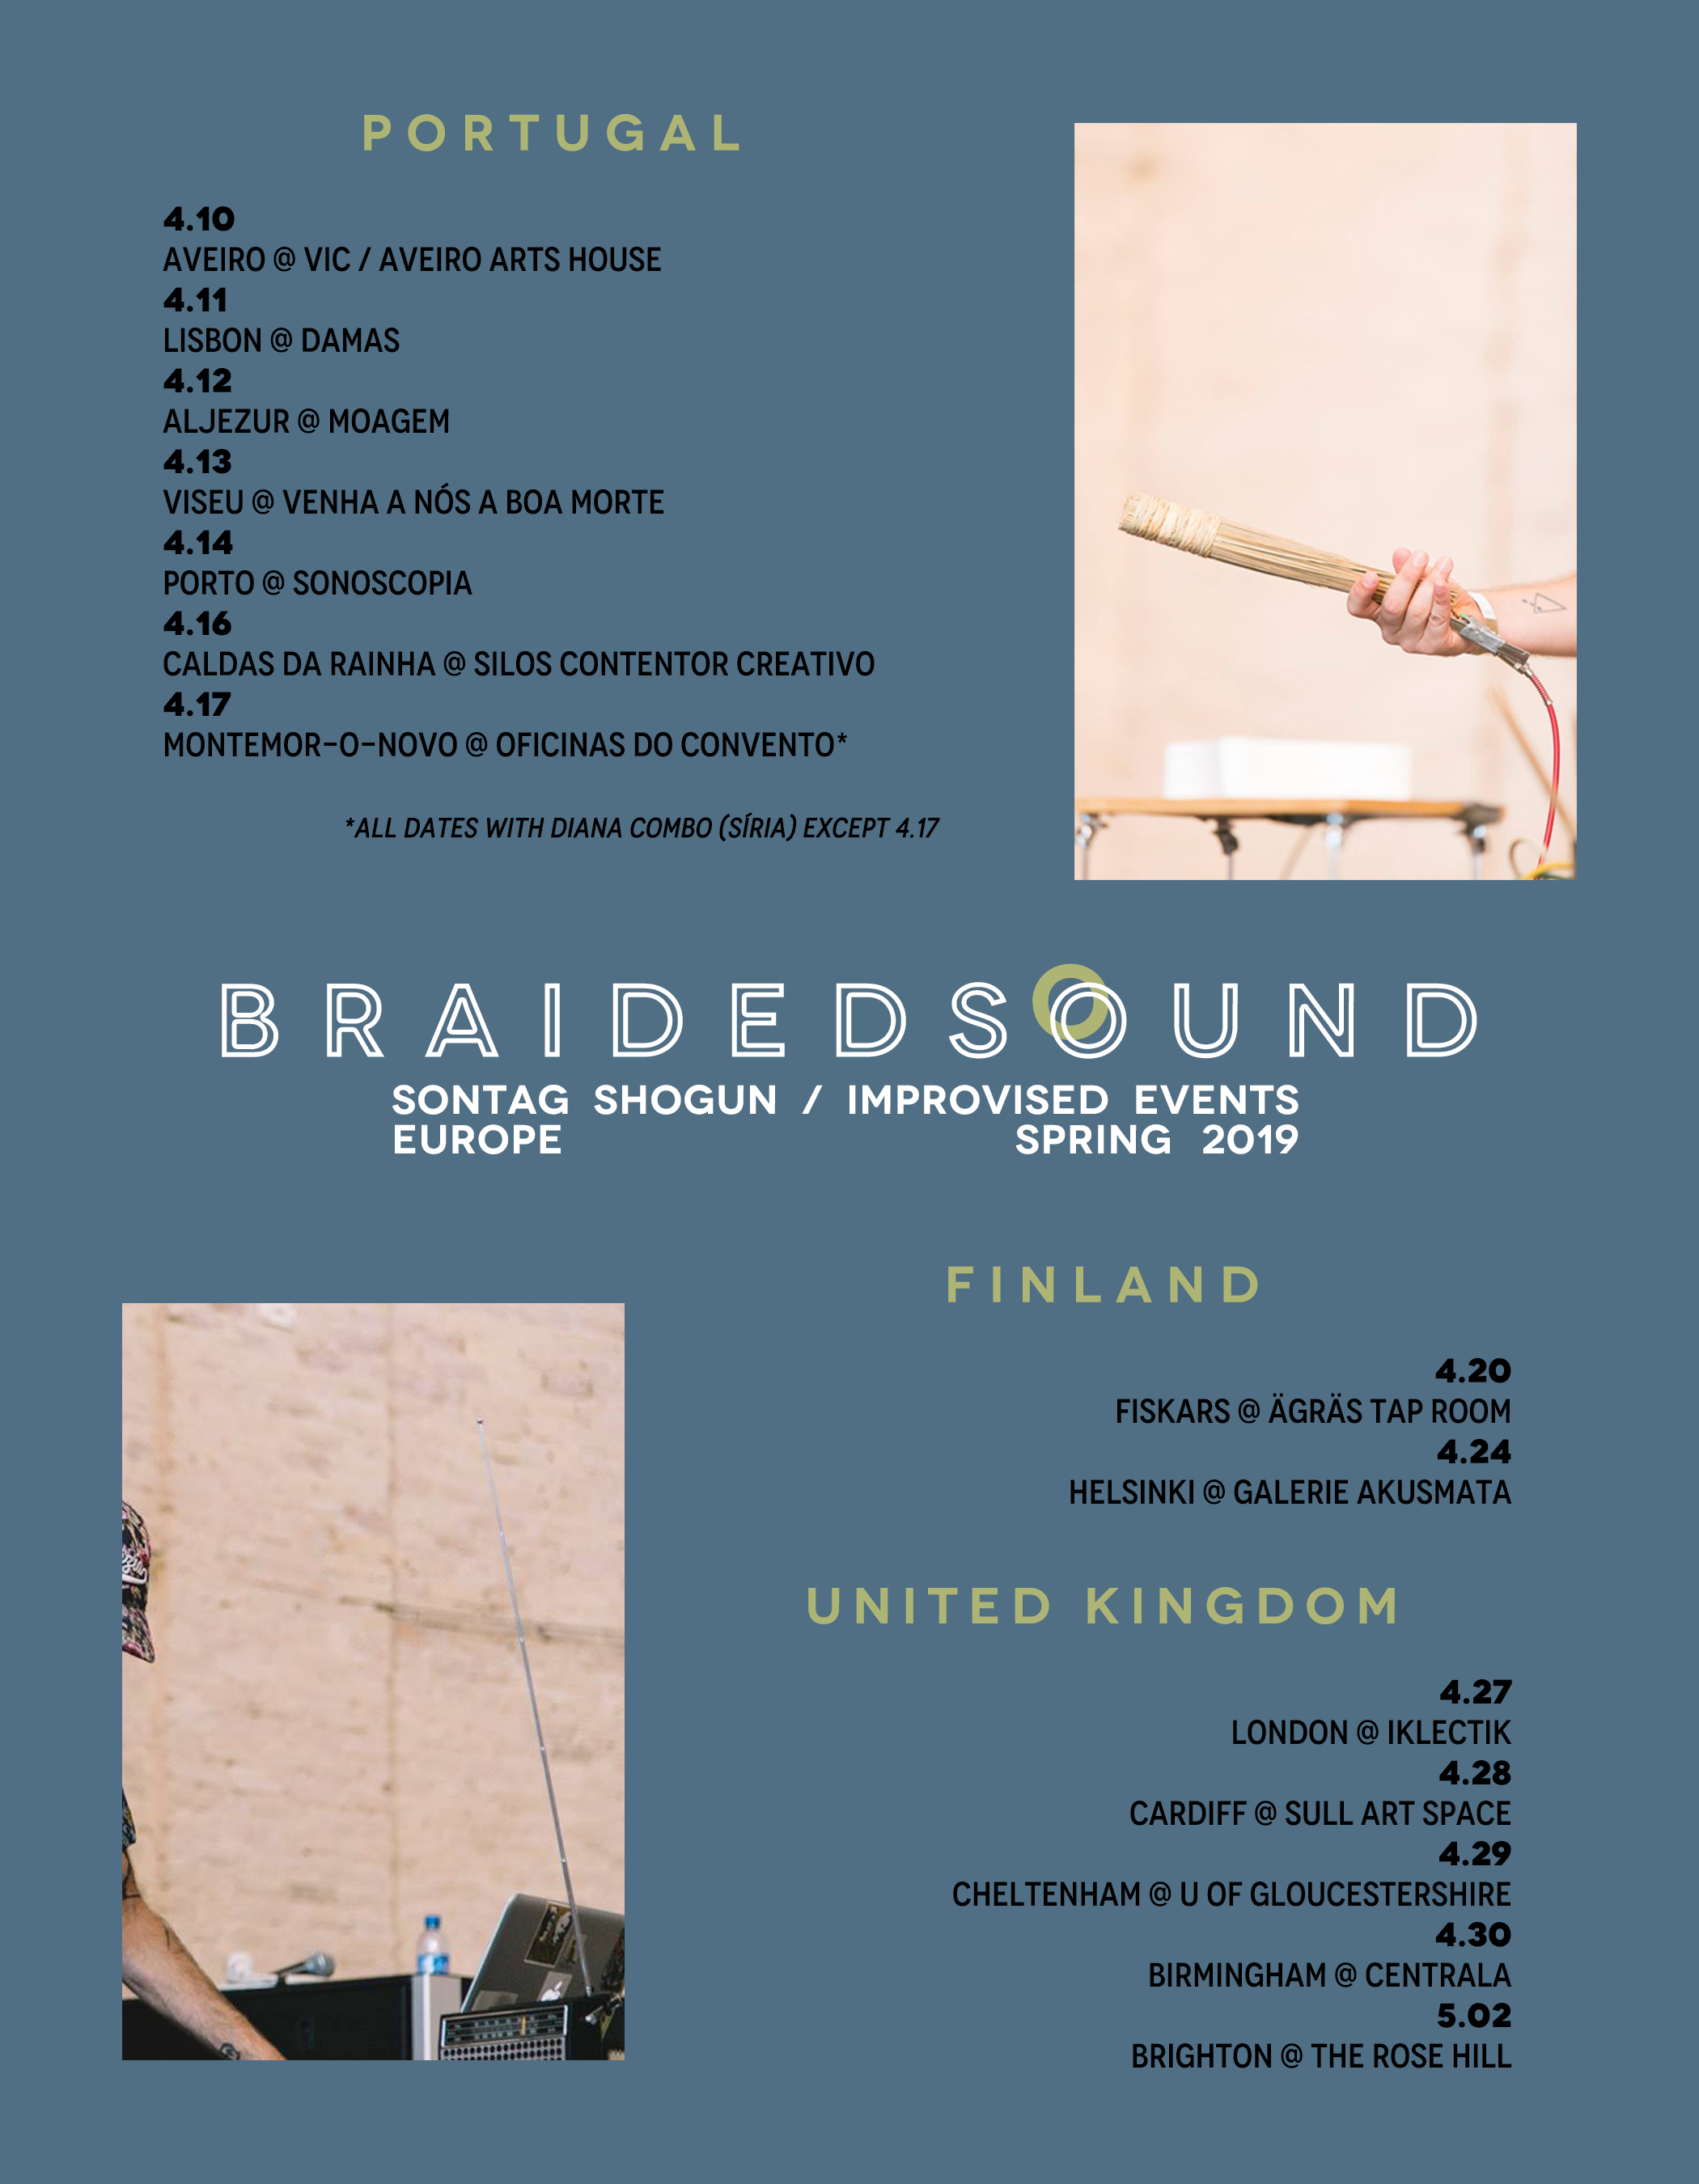 braidedsound europe 2019 dates.png